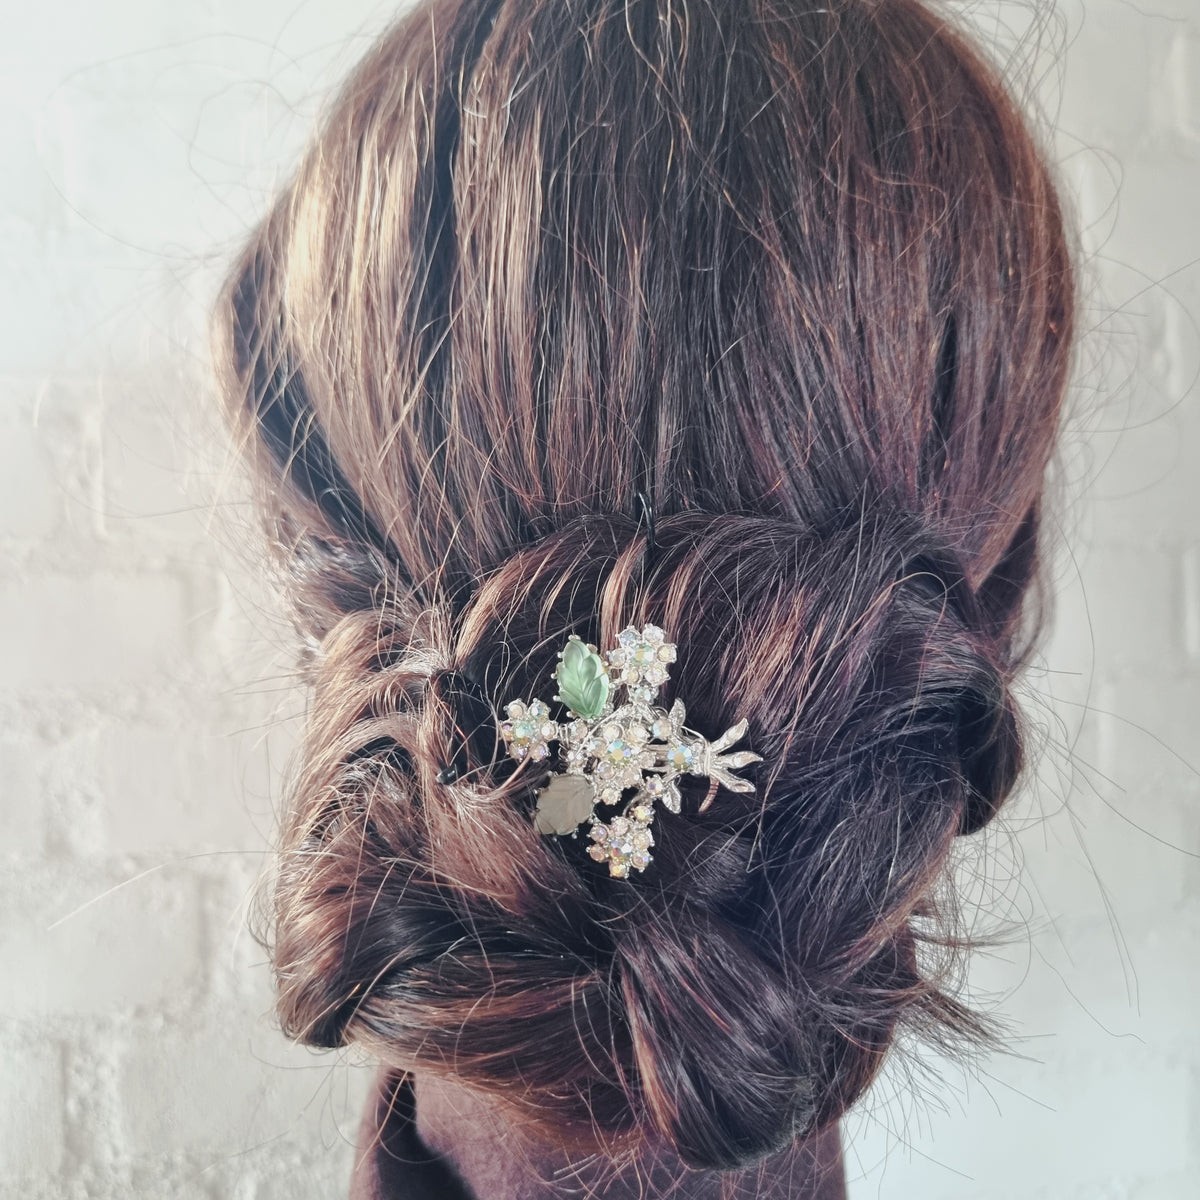 Smukt unika hårsmykke - Hårpynt med blomster og perler til bryllup, konfirmation og fest